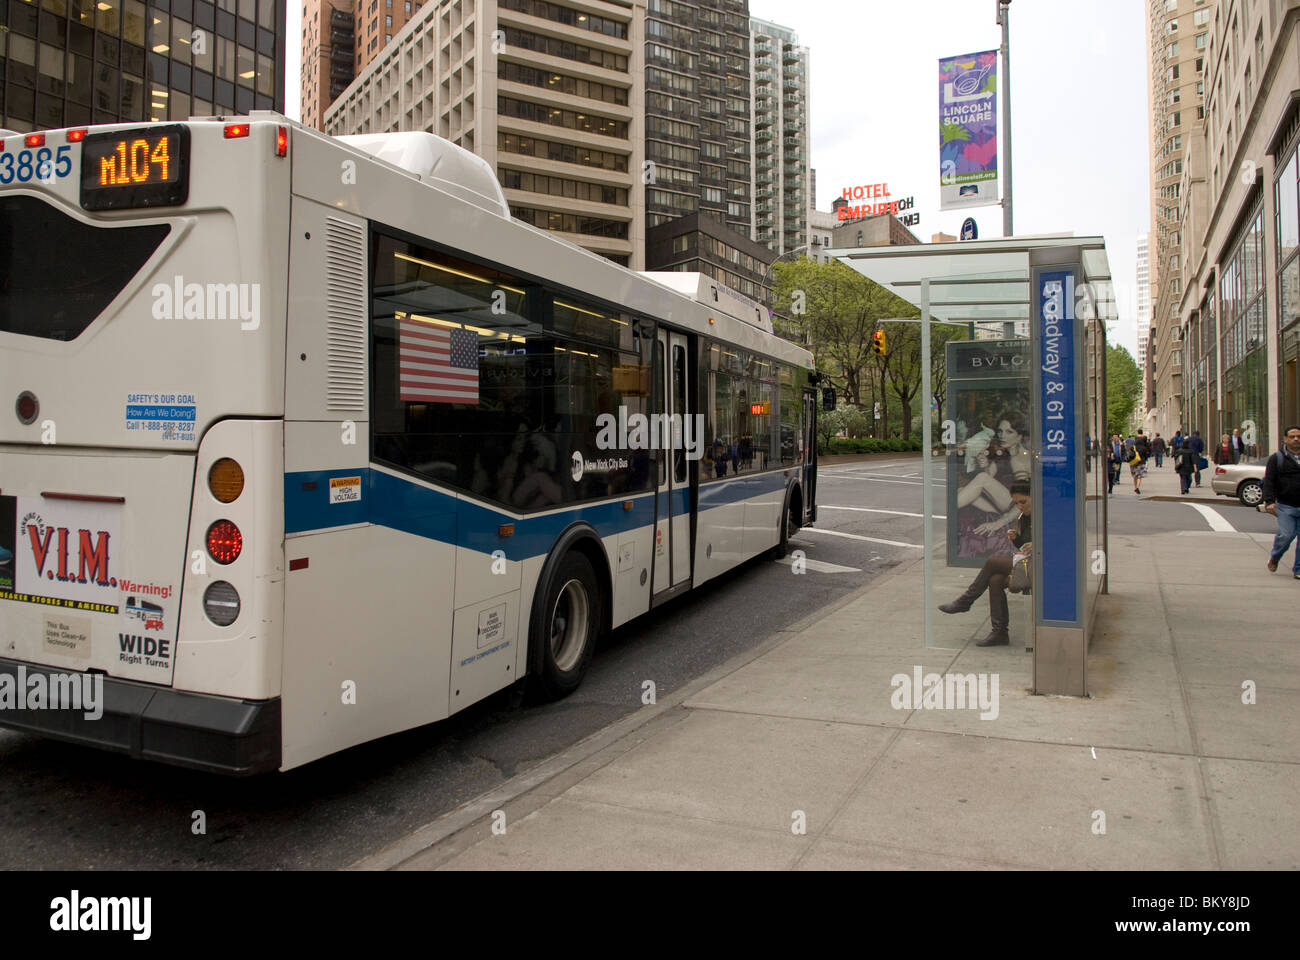 M104 Bus, via Broadway, Columbus Circle,  Public Transportation, New York City, 2010 Stock Photo